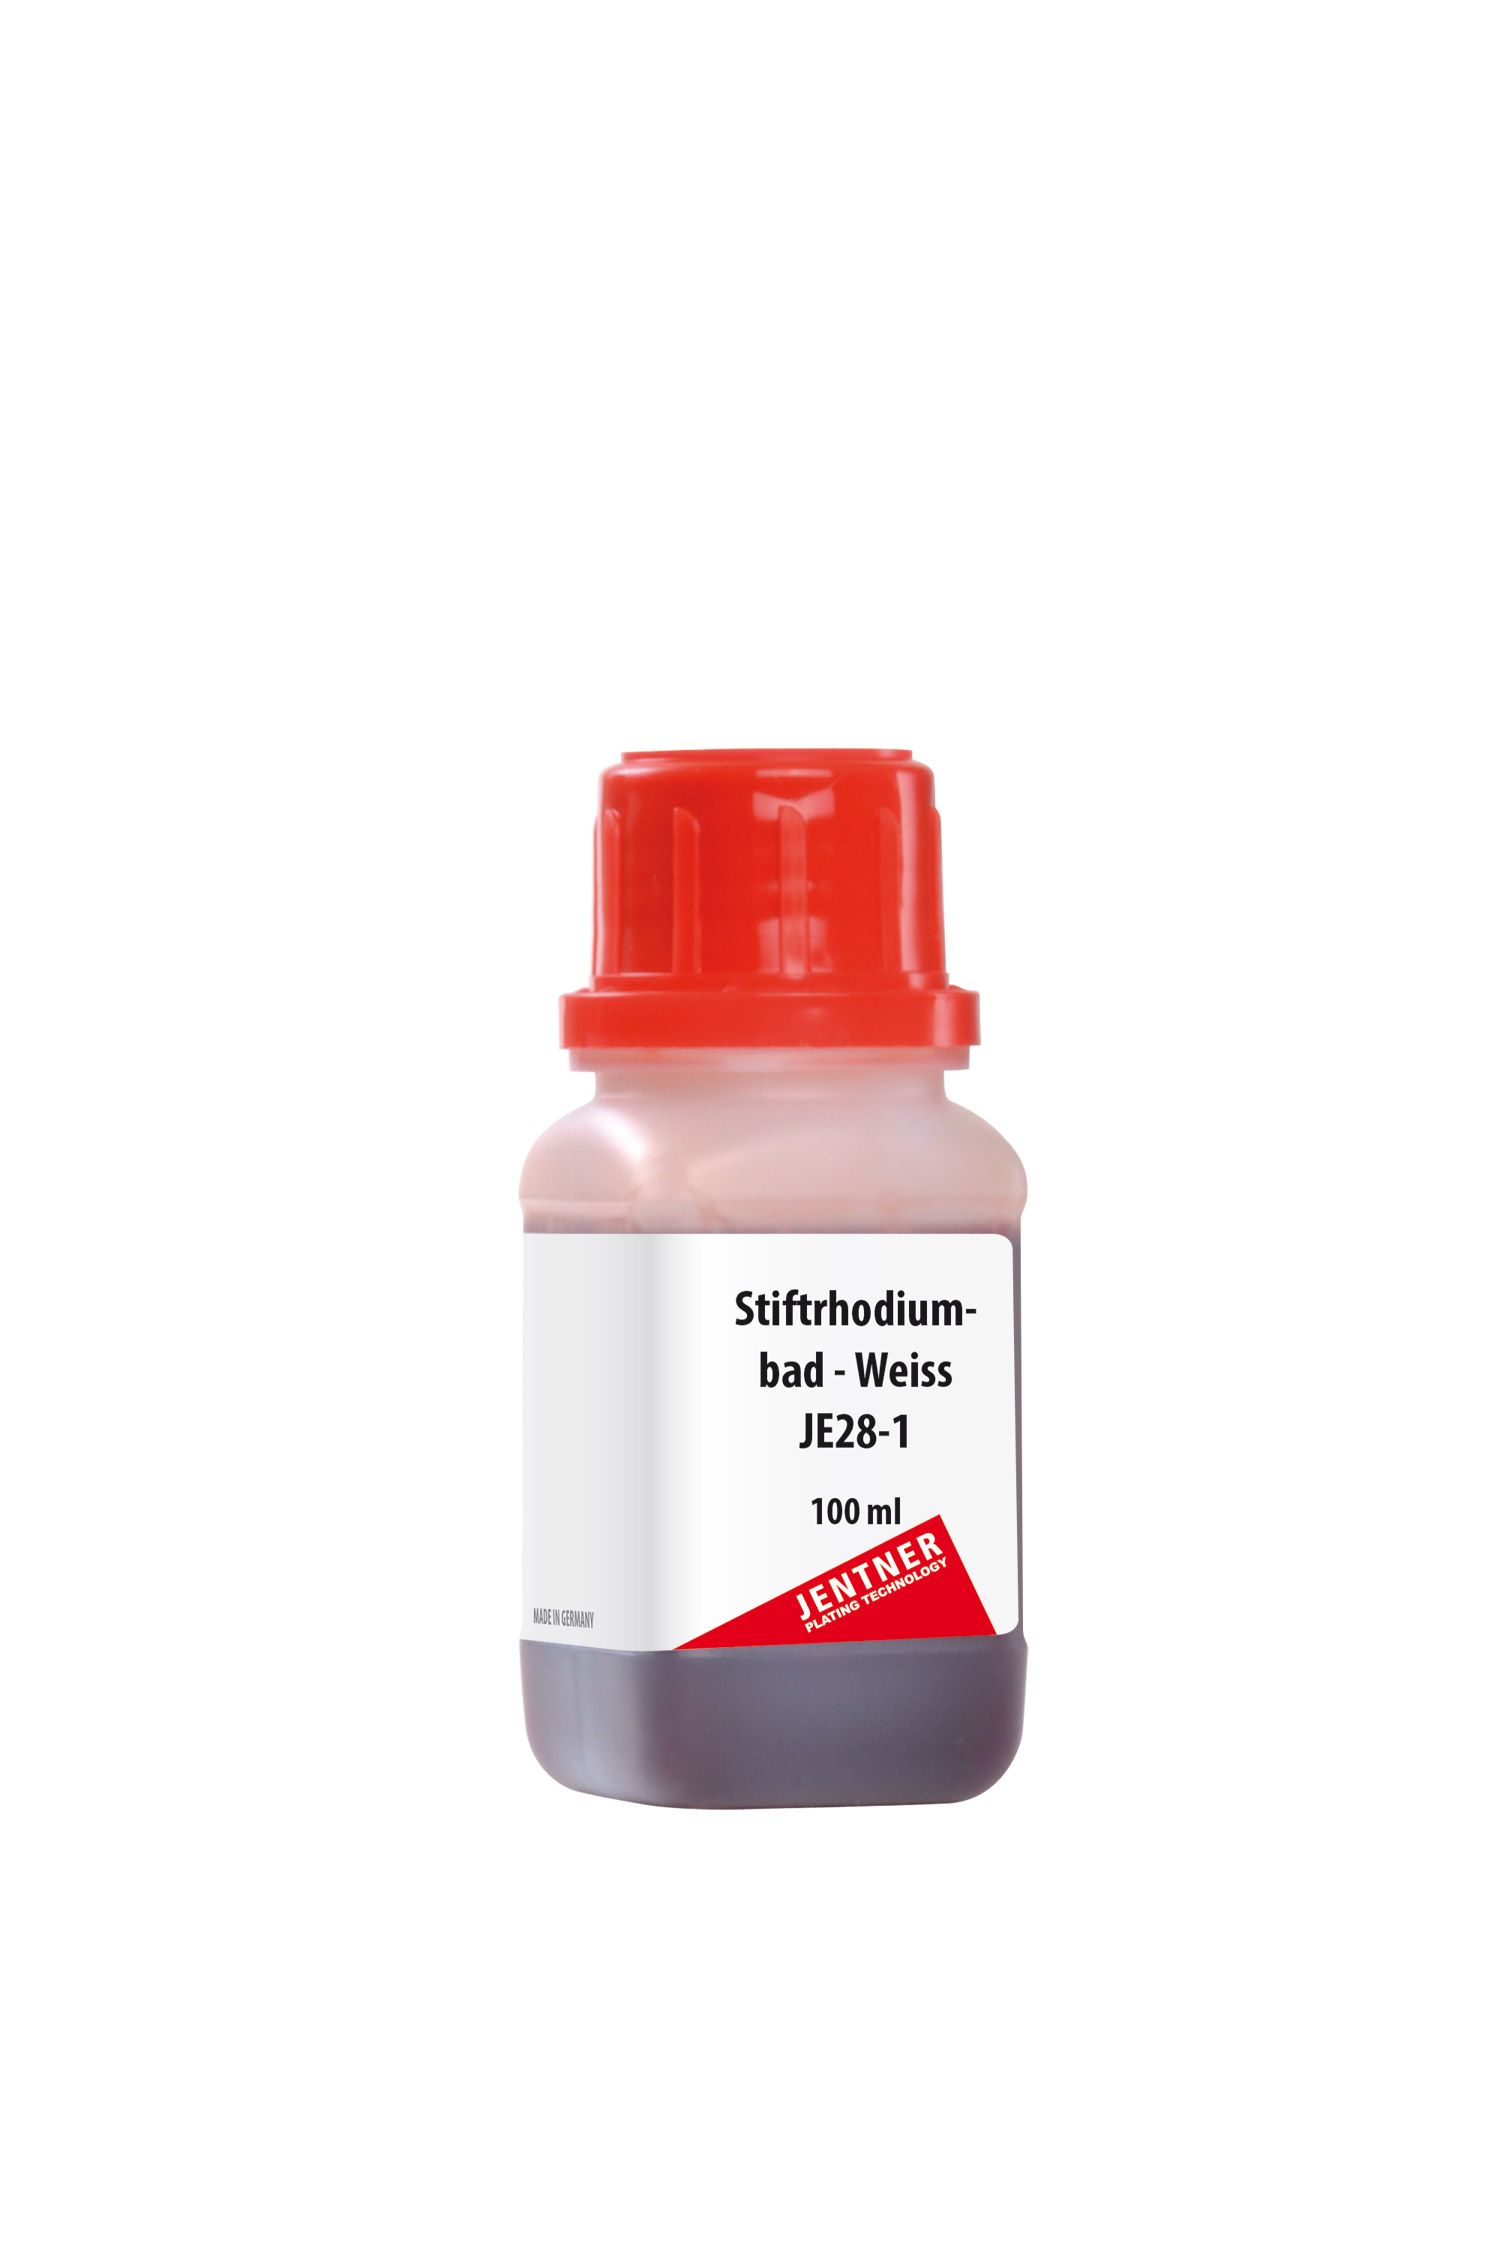 Stiftrhodiumbad JE28-1 (2g/100 ml)